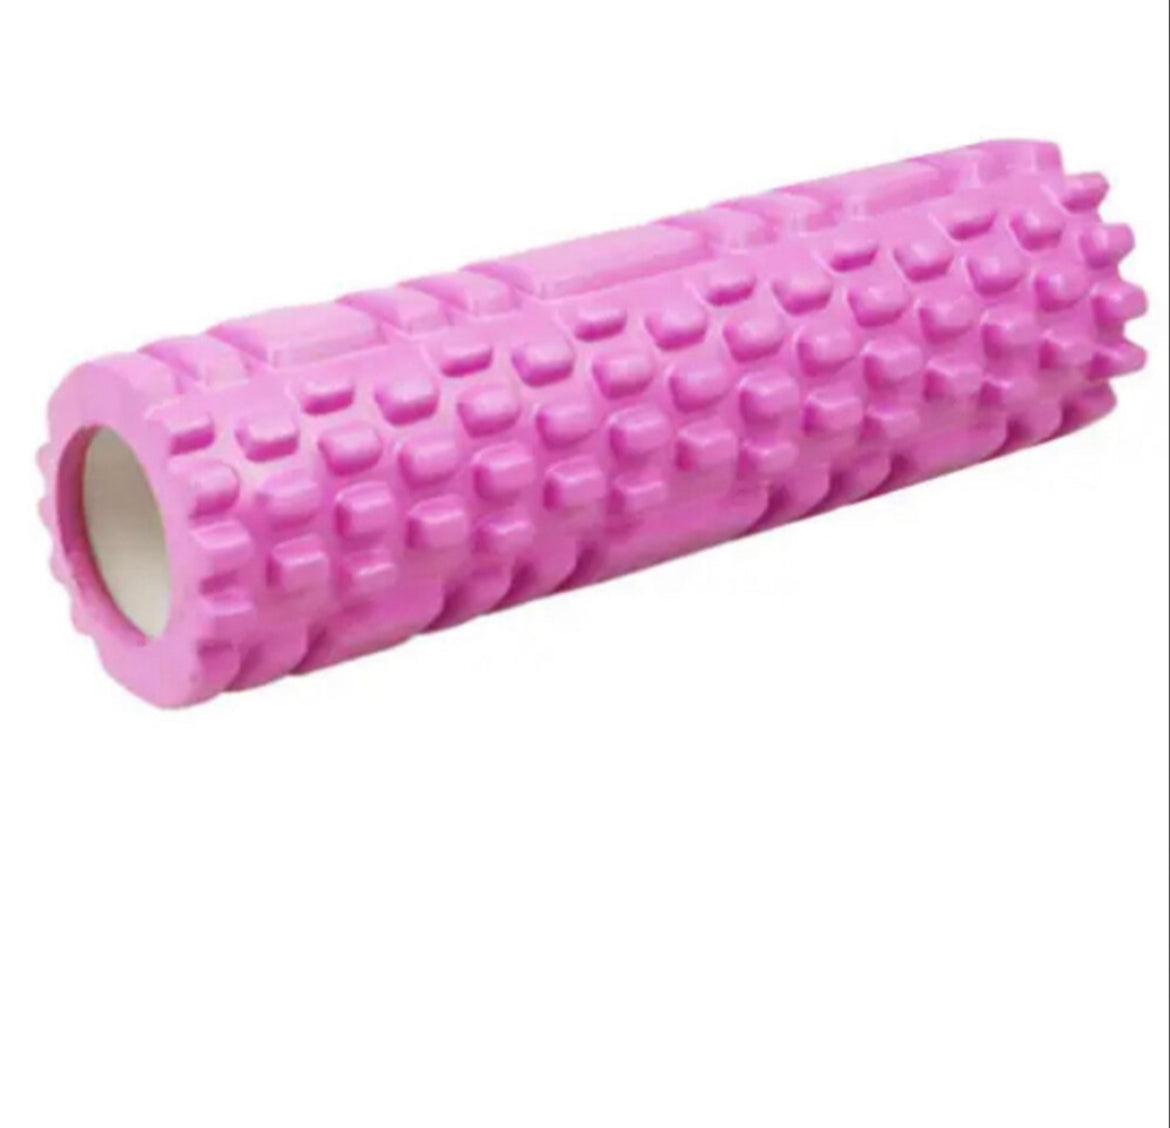 Roze foamroller voor spierherstel en massage